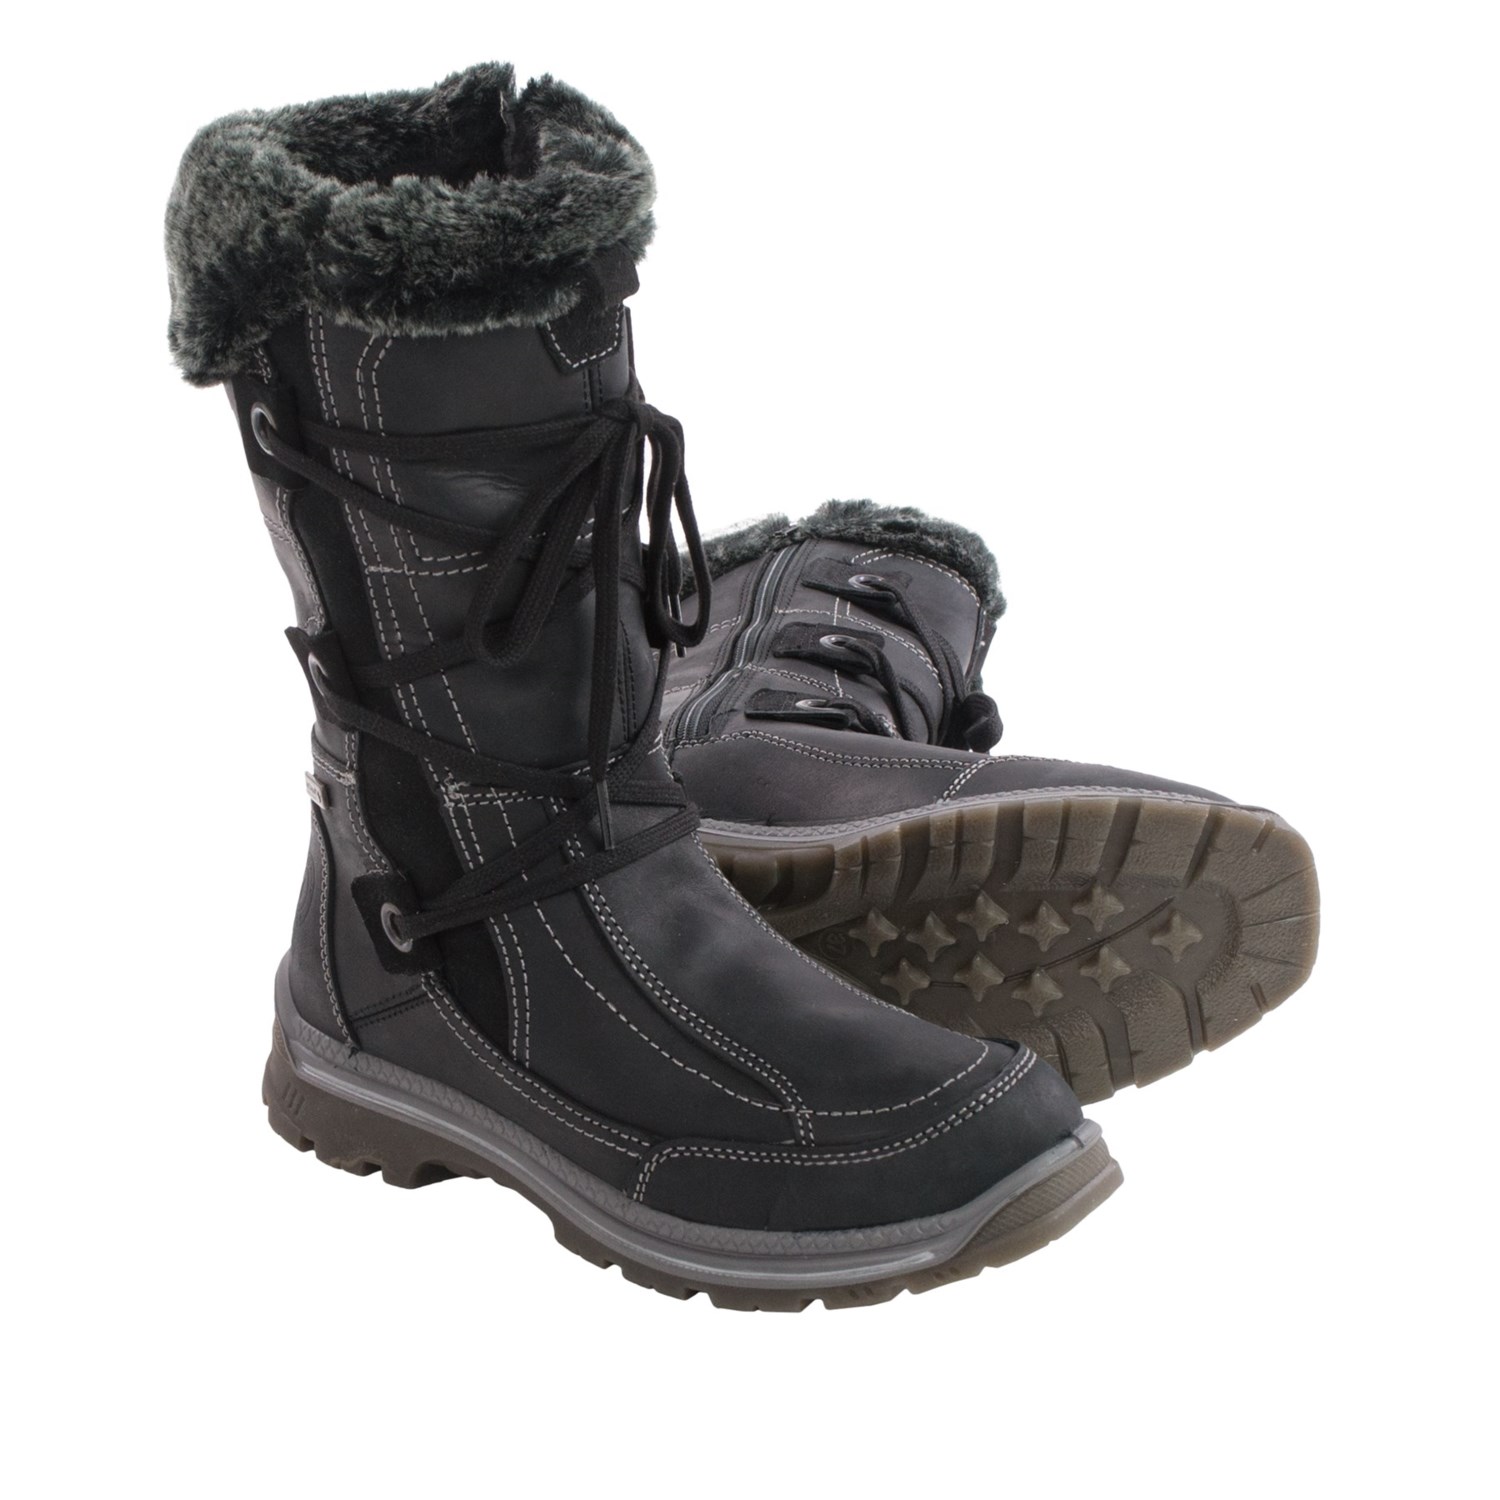 Santana Canada Mendoza Leather Snow Boots (For Women) - Save 57%